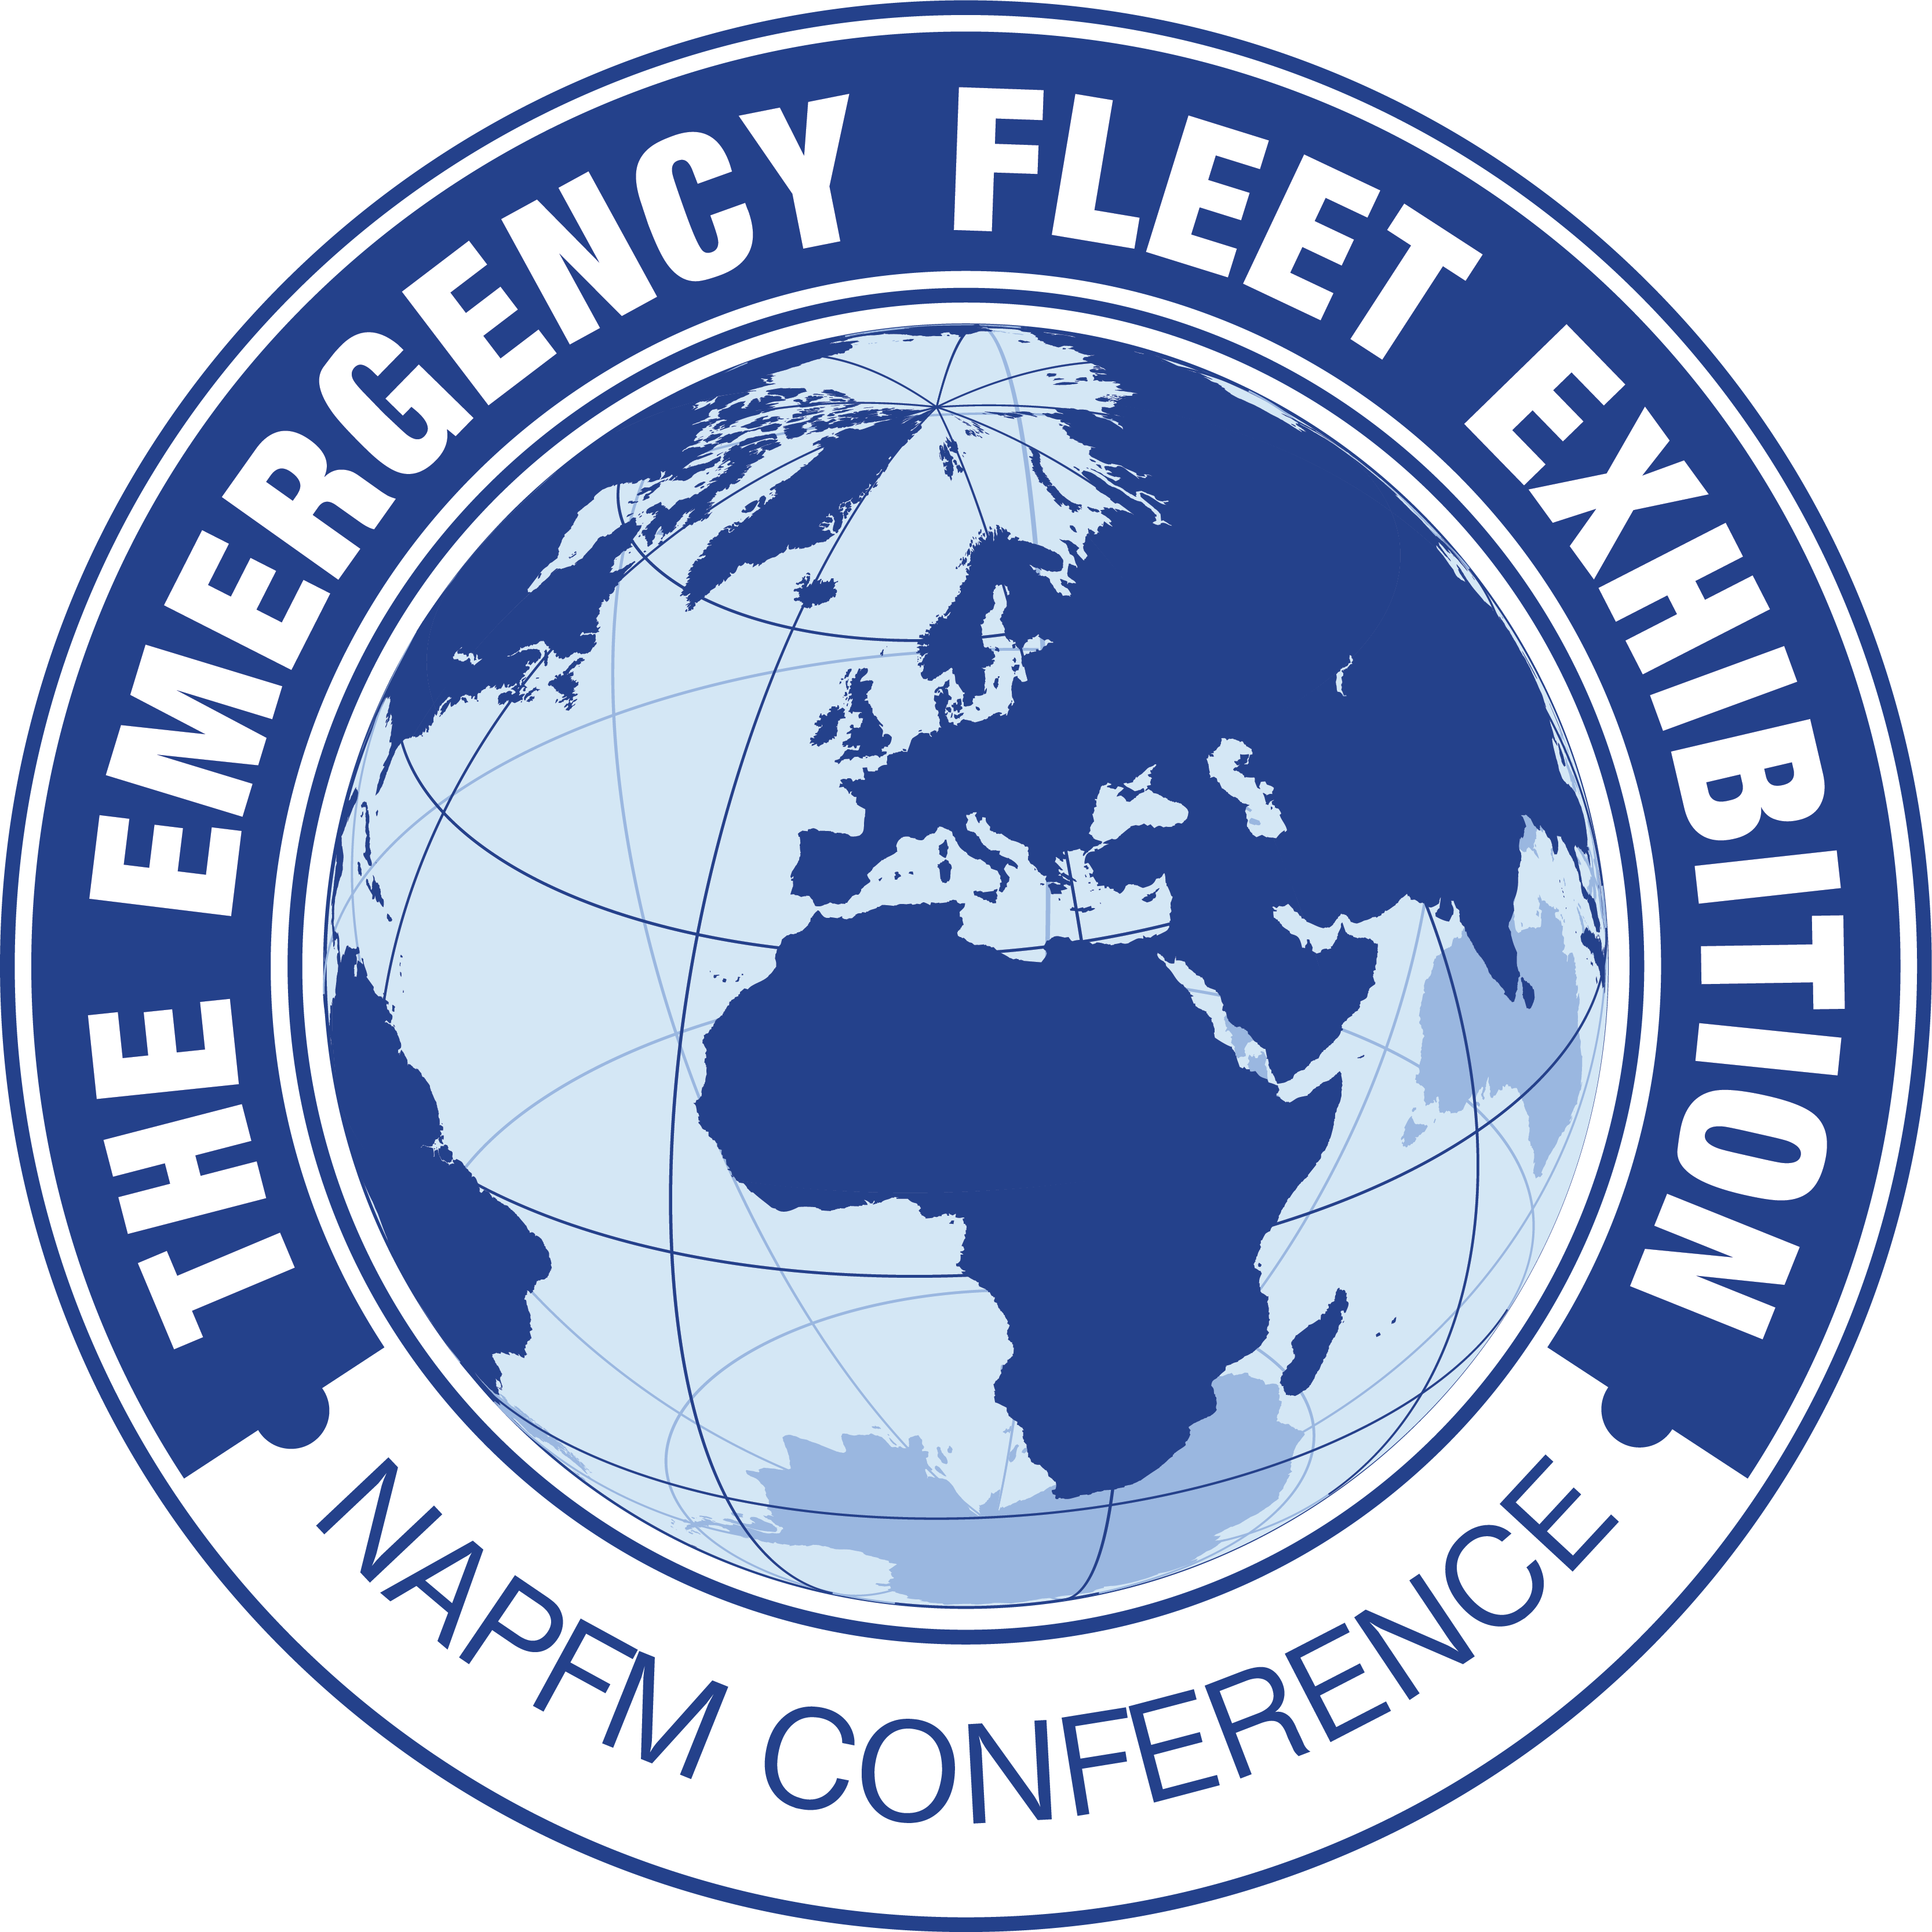 NAPFM The Emergency Fleet Exhibition 